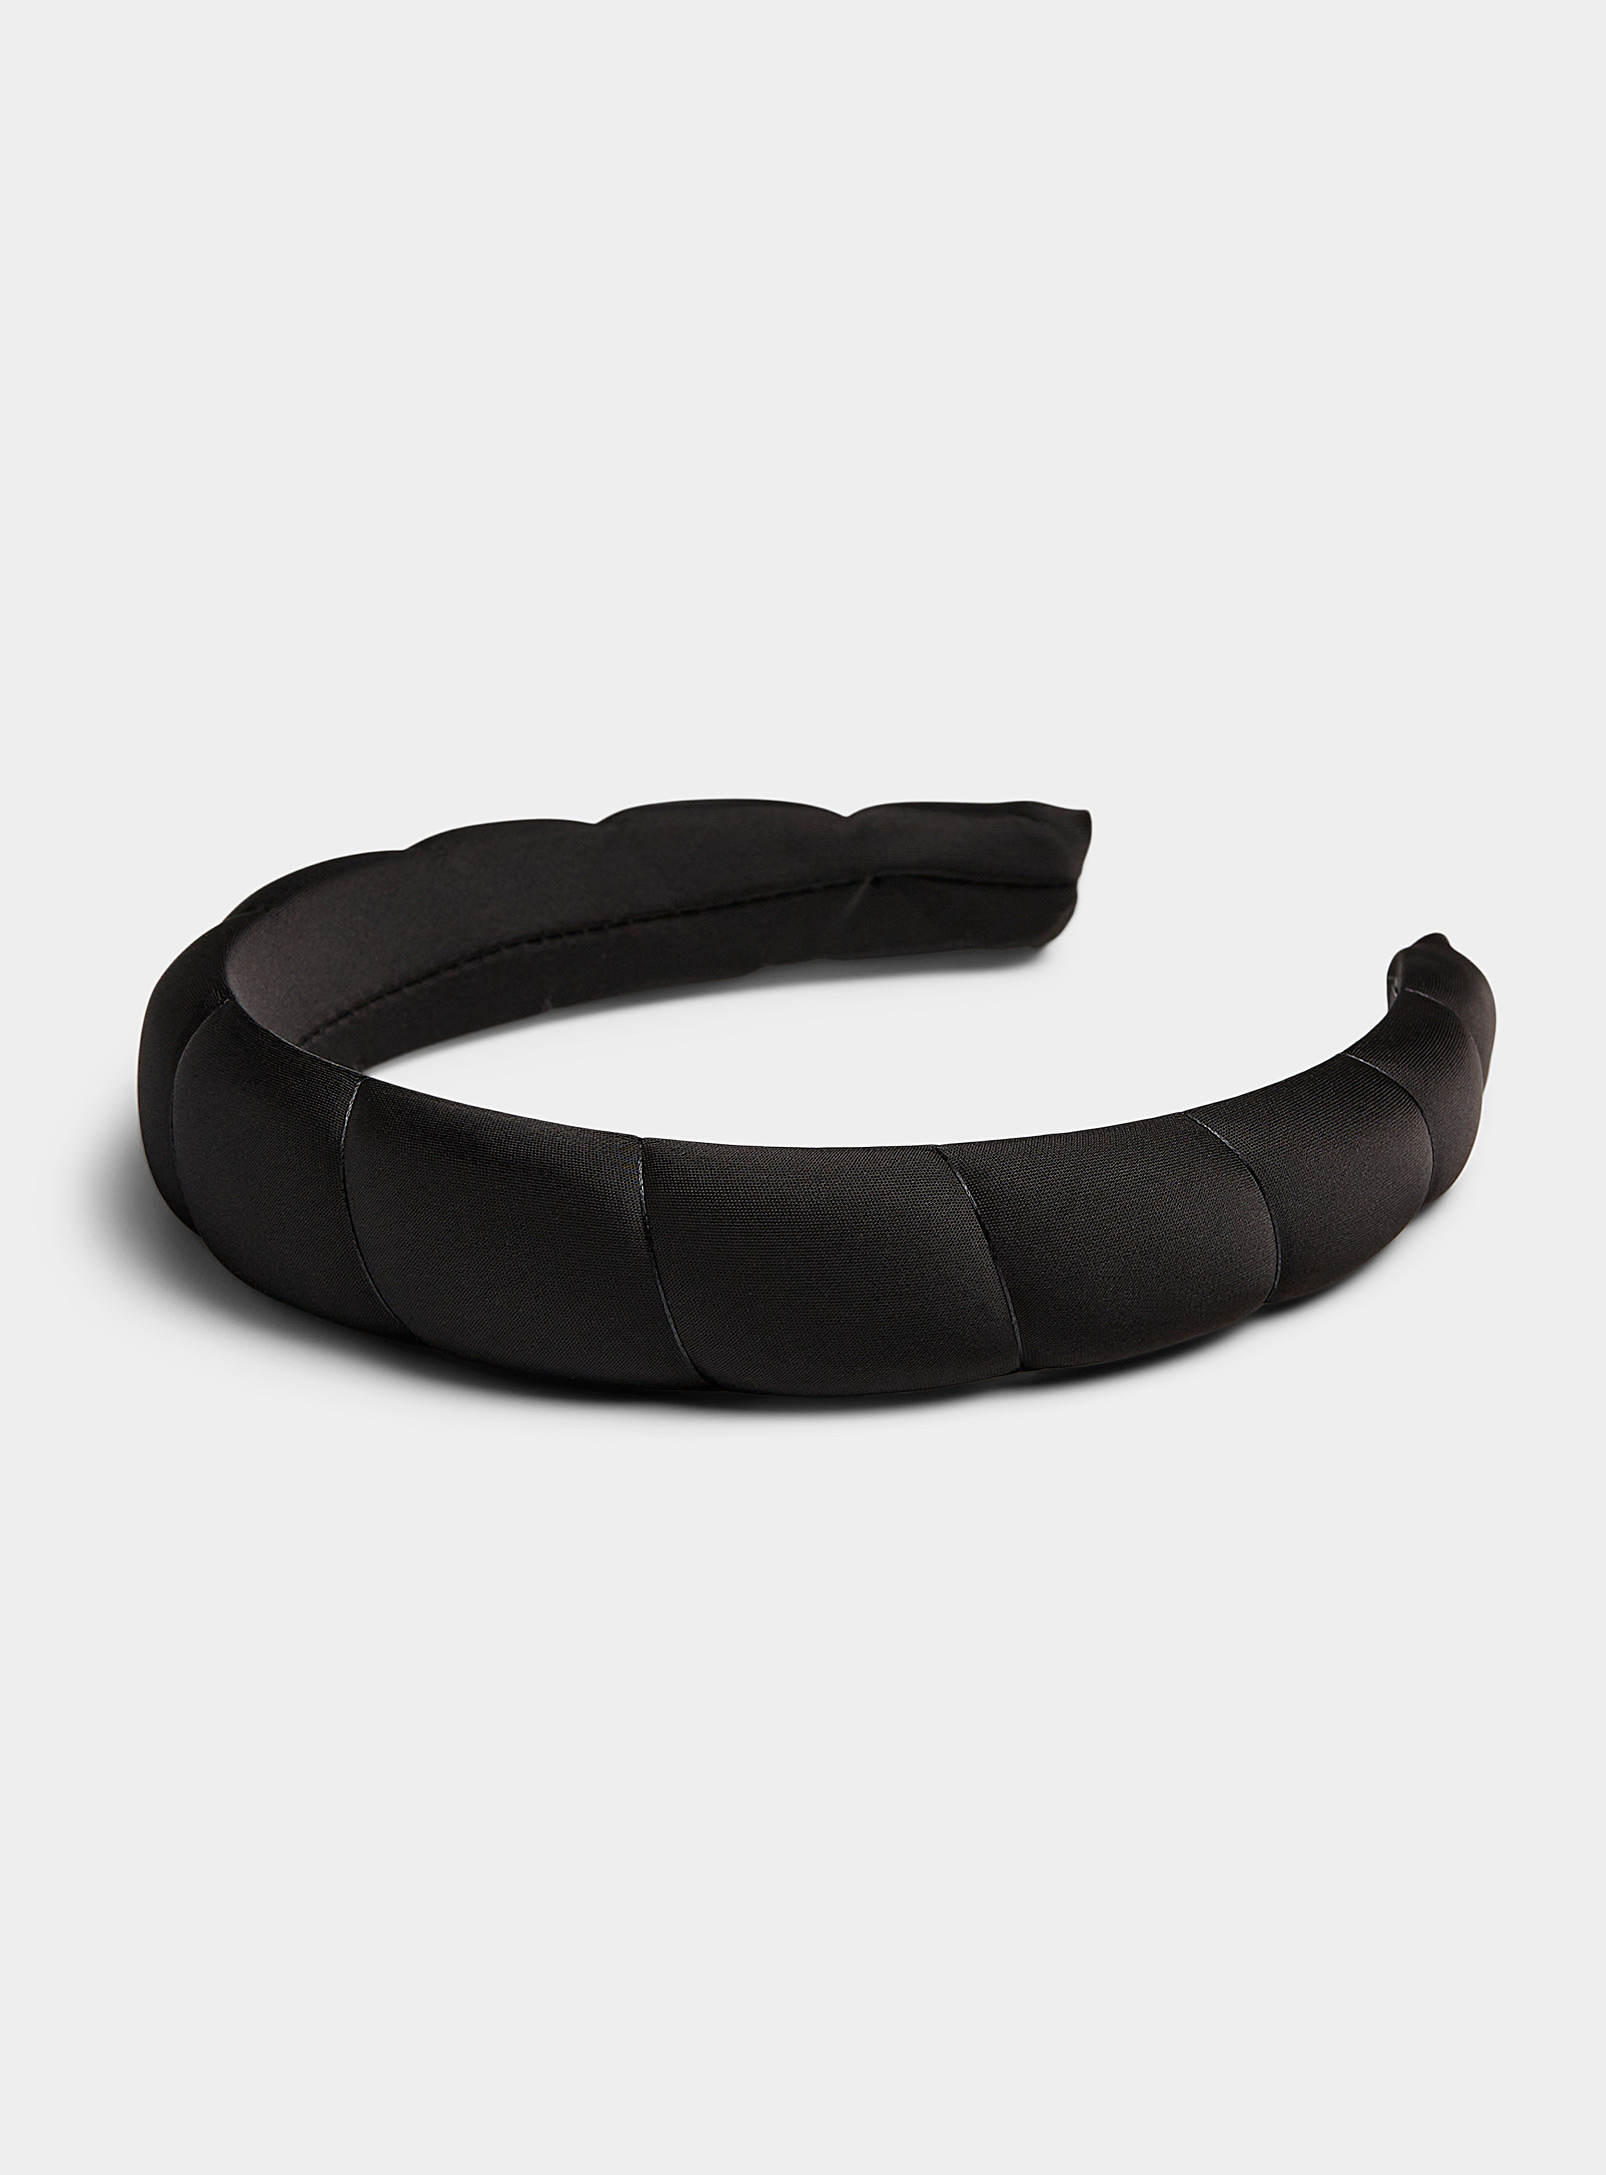 Simons - Women's Padded black headband